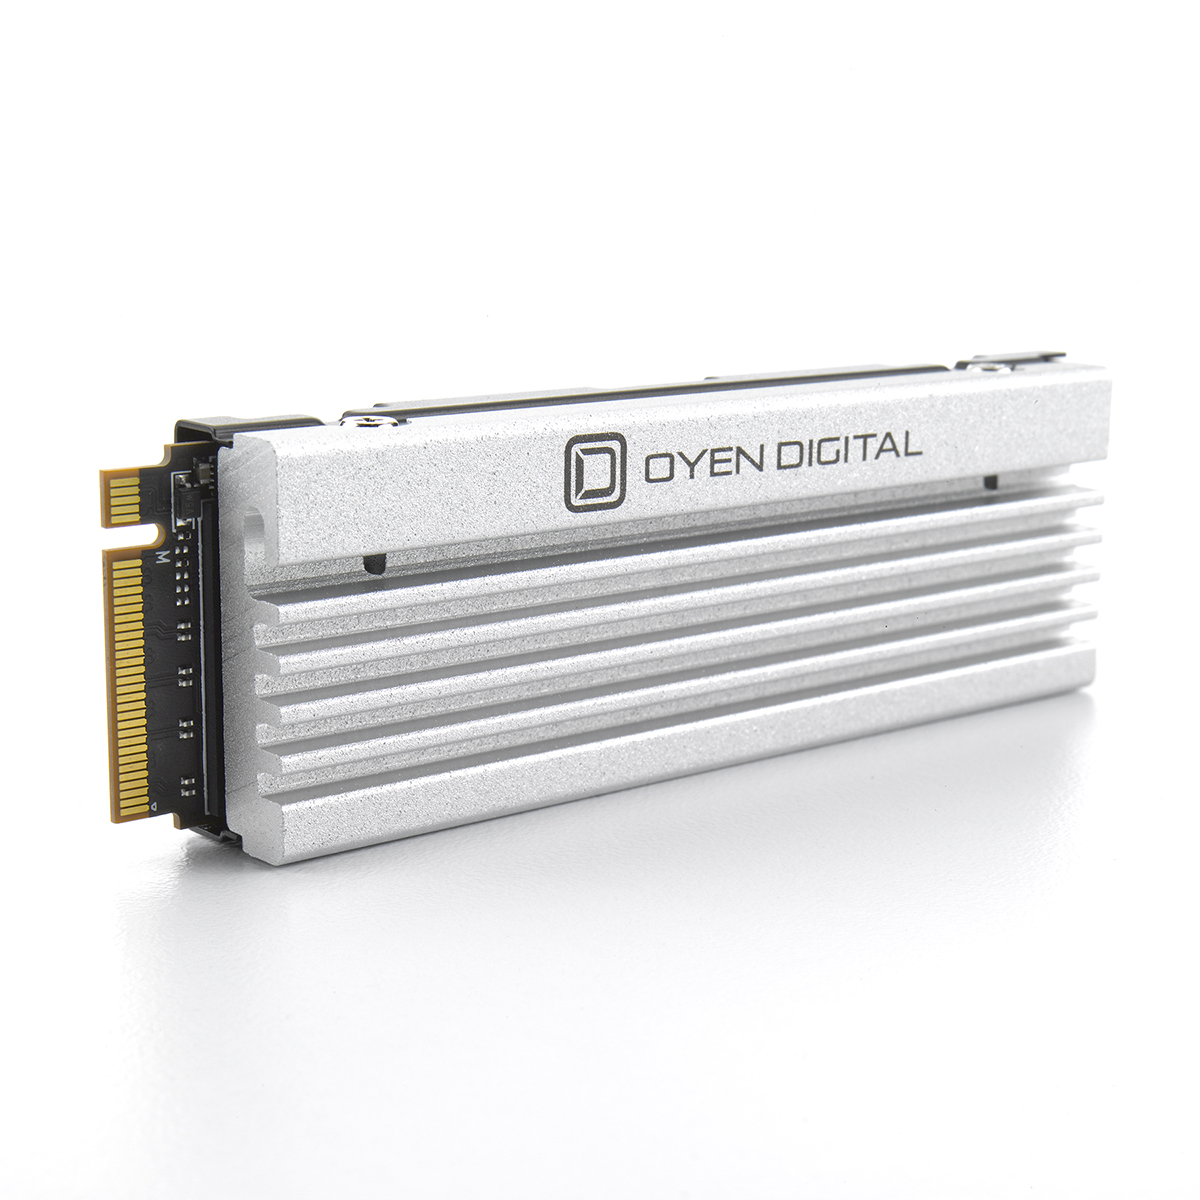 Oyen Digital: Dash Pro NVMe PCIe TLC NAND SSD with Heatsink